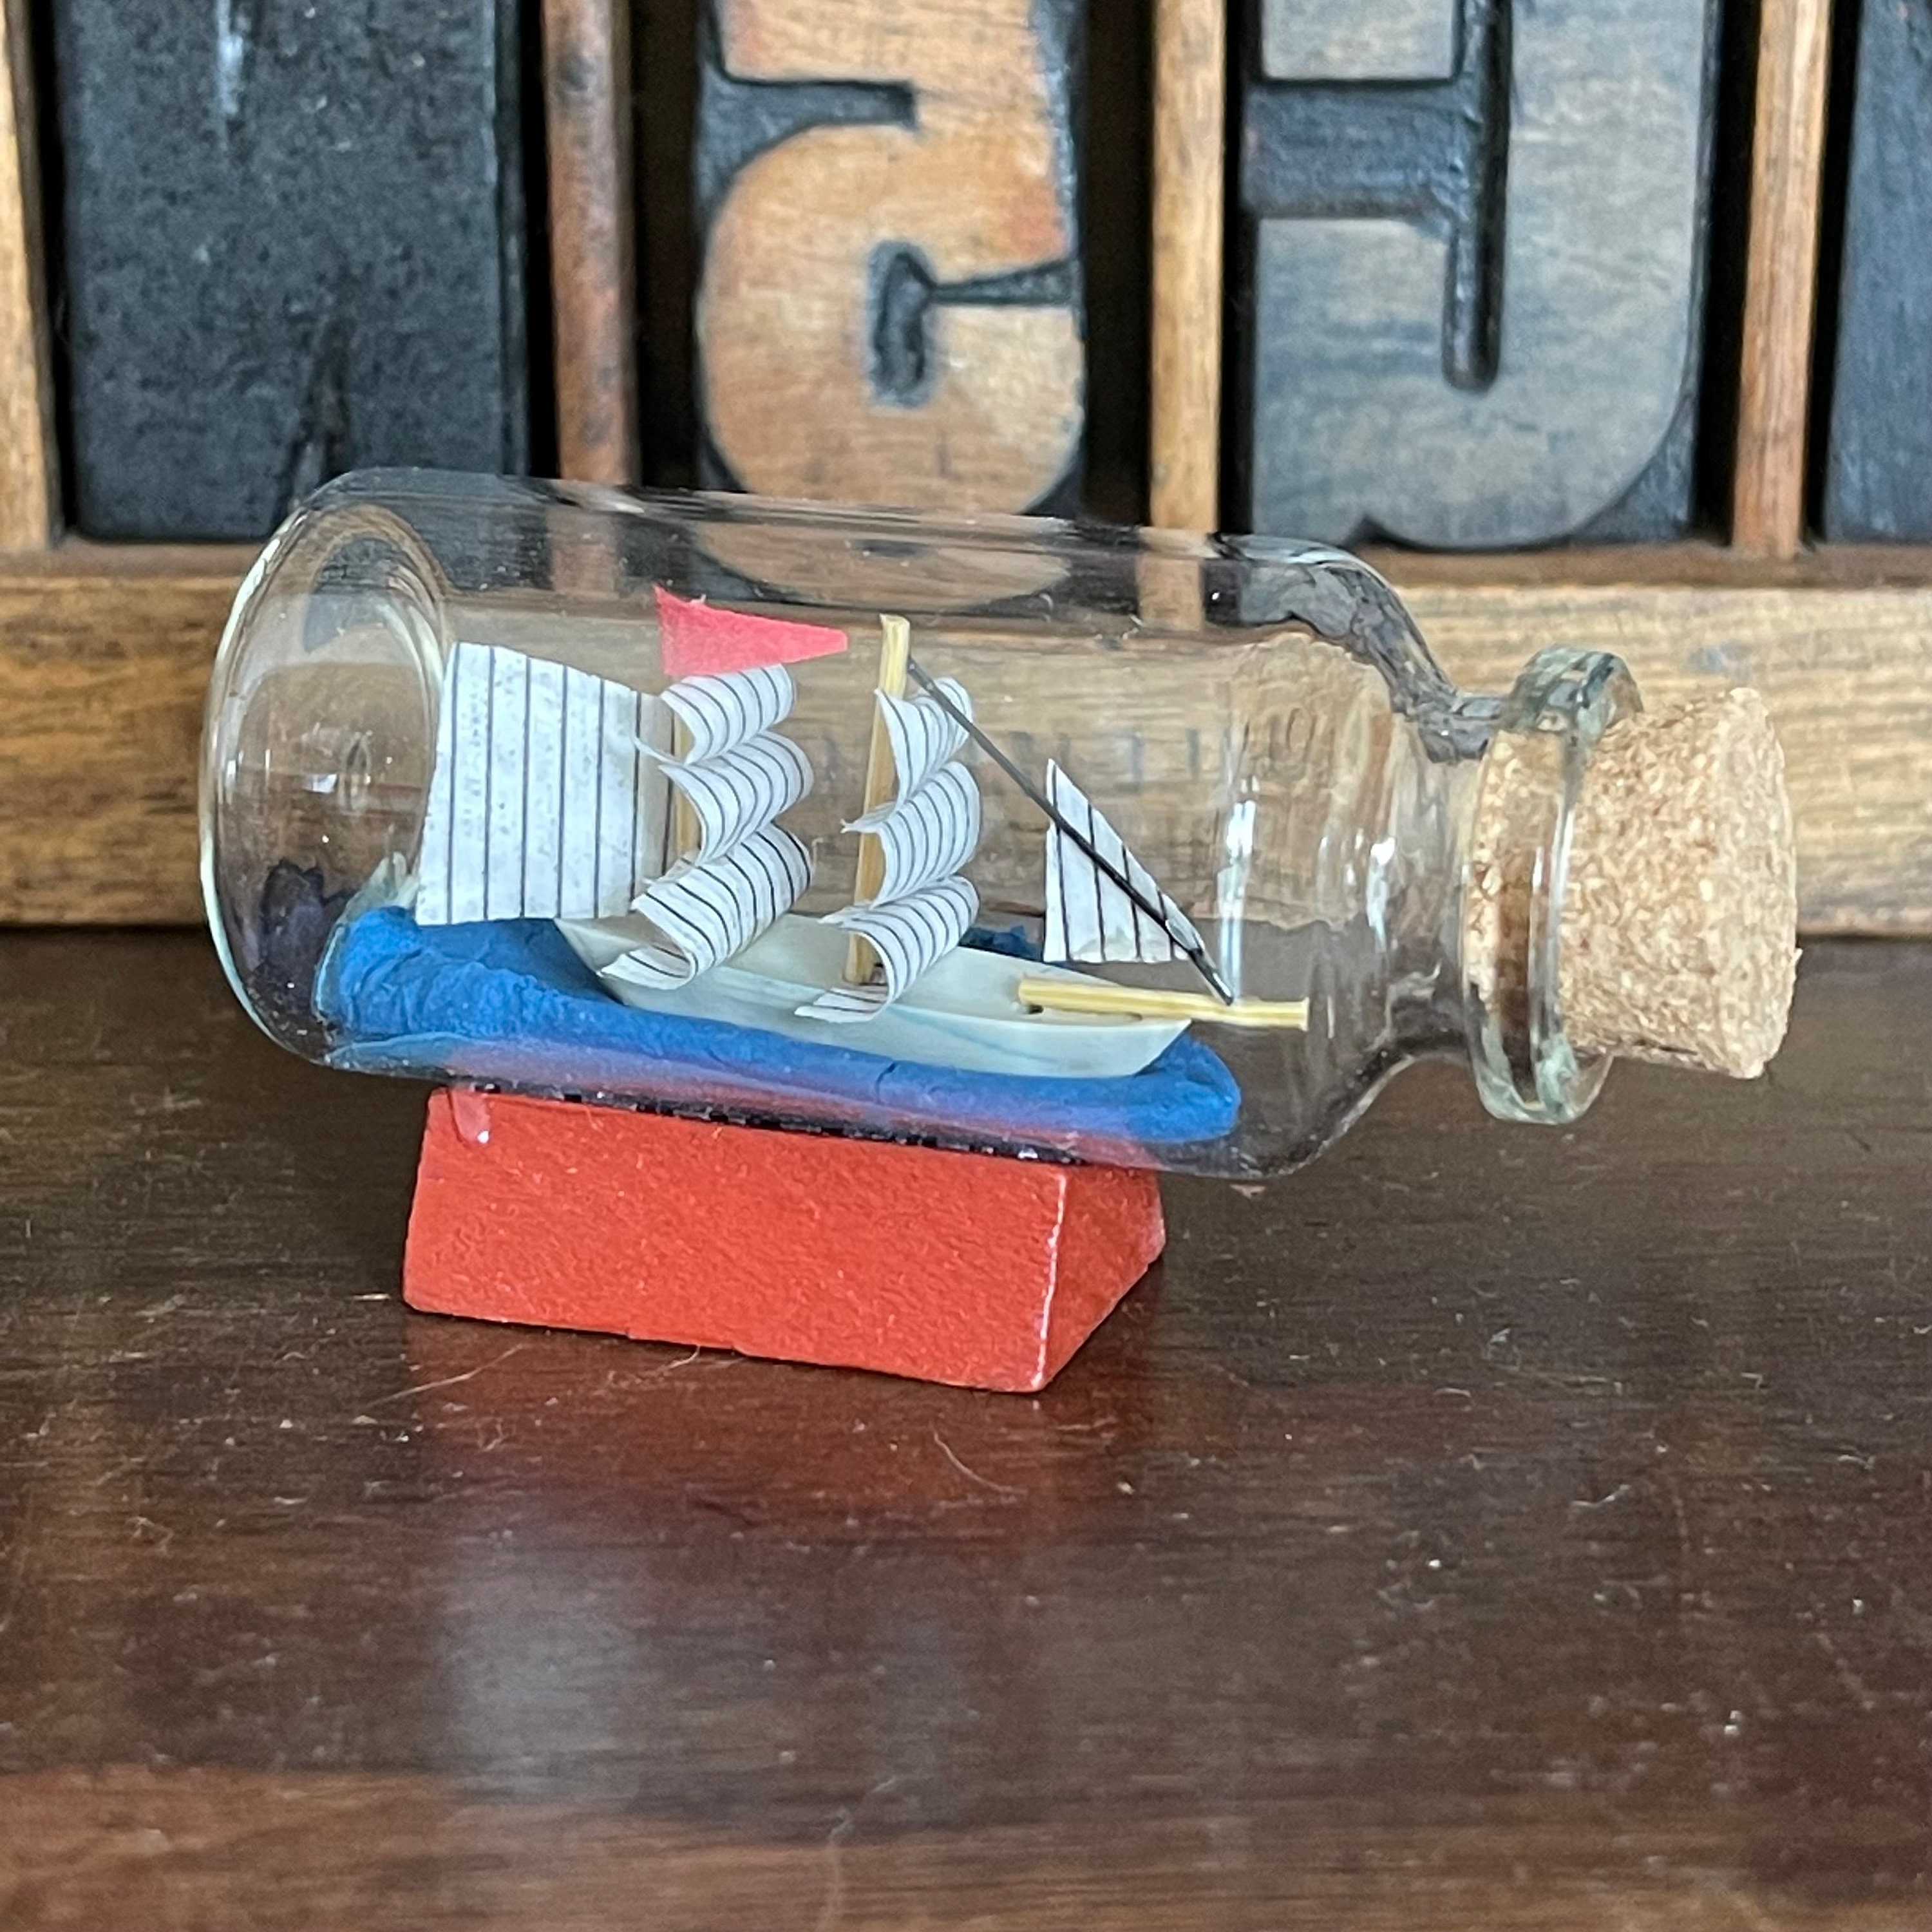 Golden Yacht Ship In A Bottle Model kit